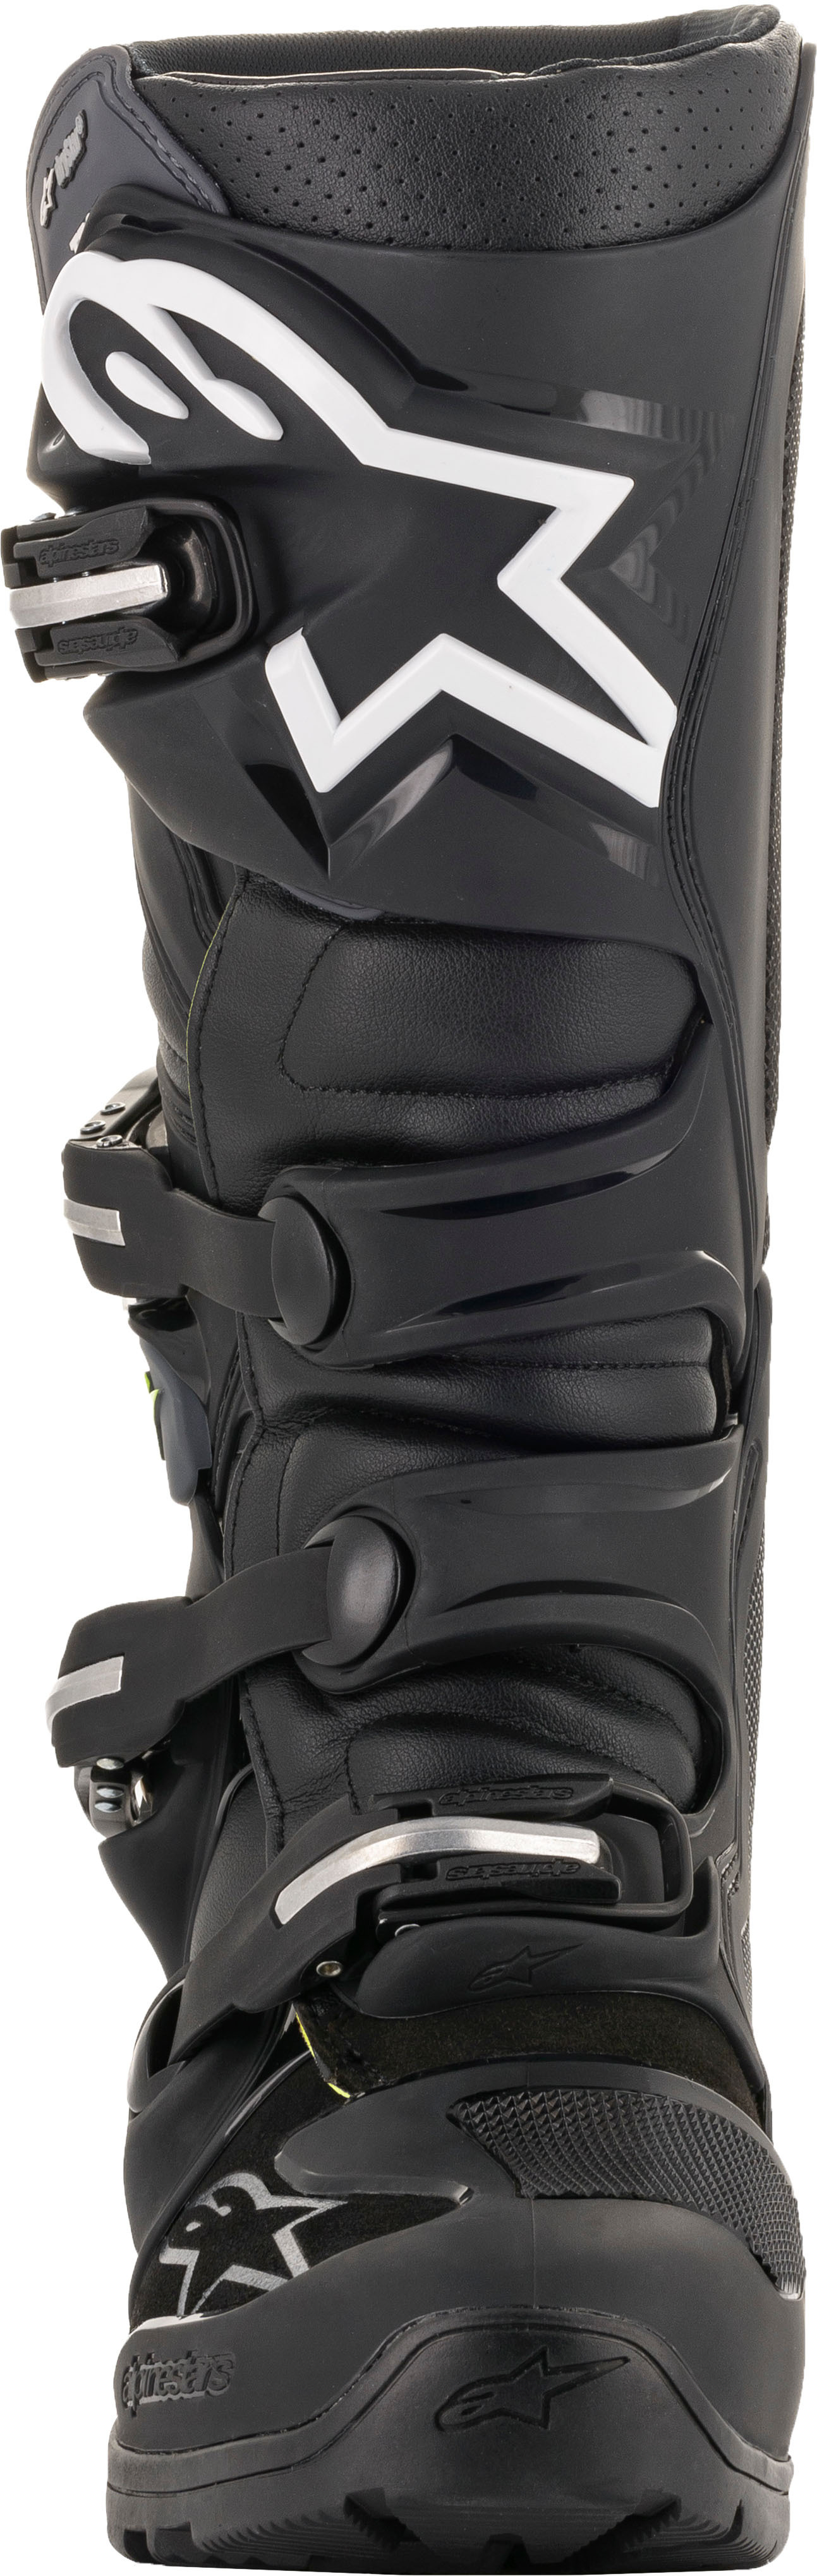 Tech 7 Enduro Drystar Boots Black/Grey US 09 - Click Image to Close